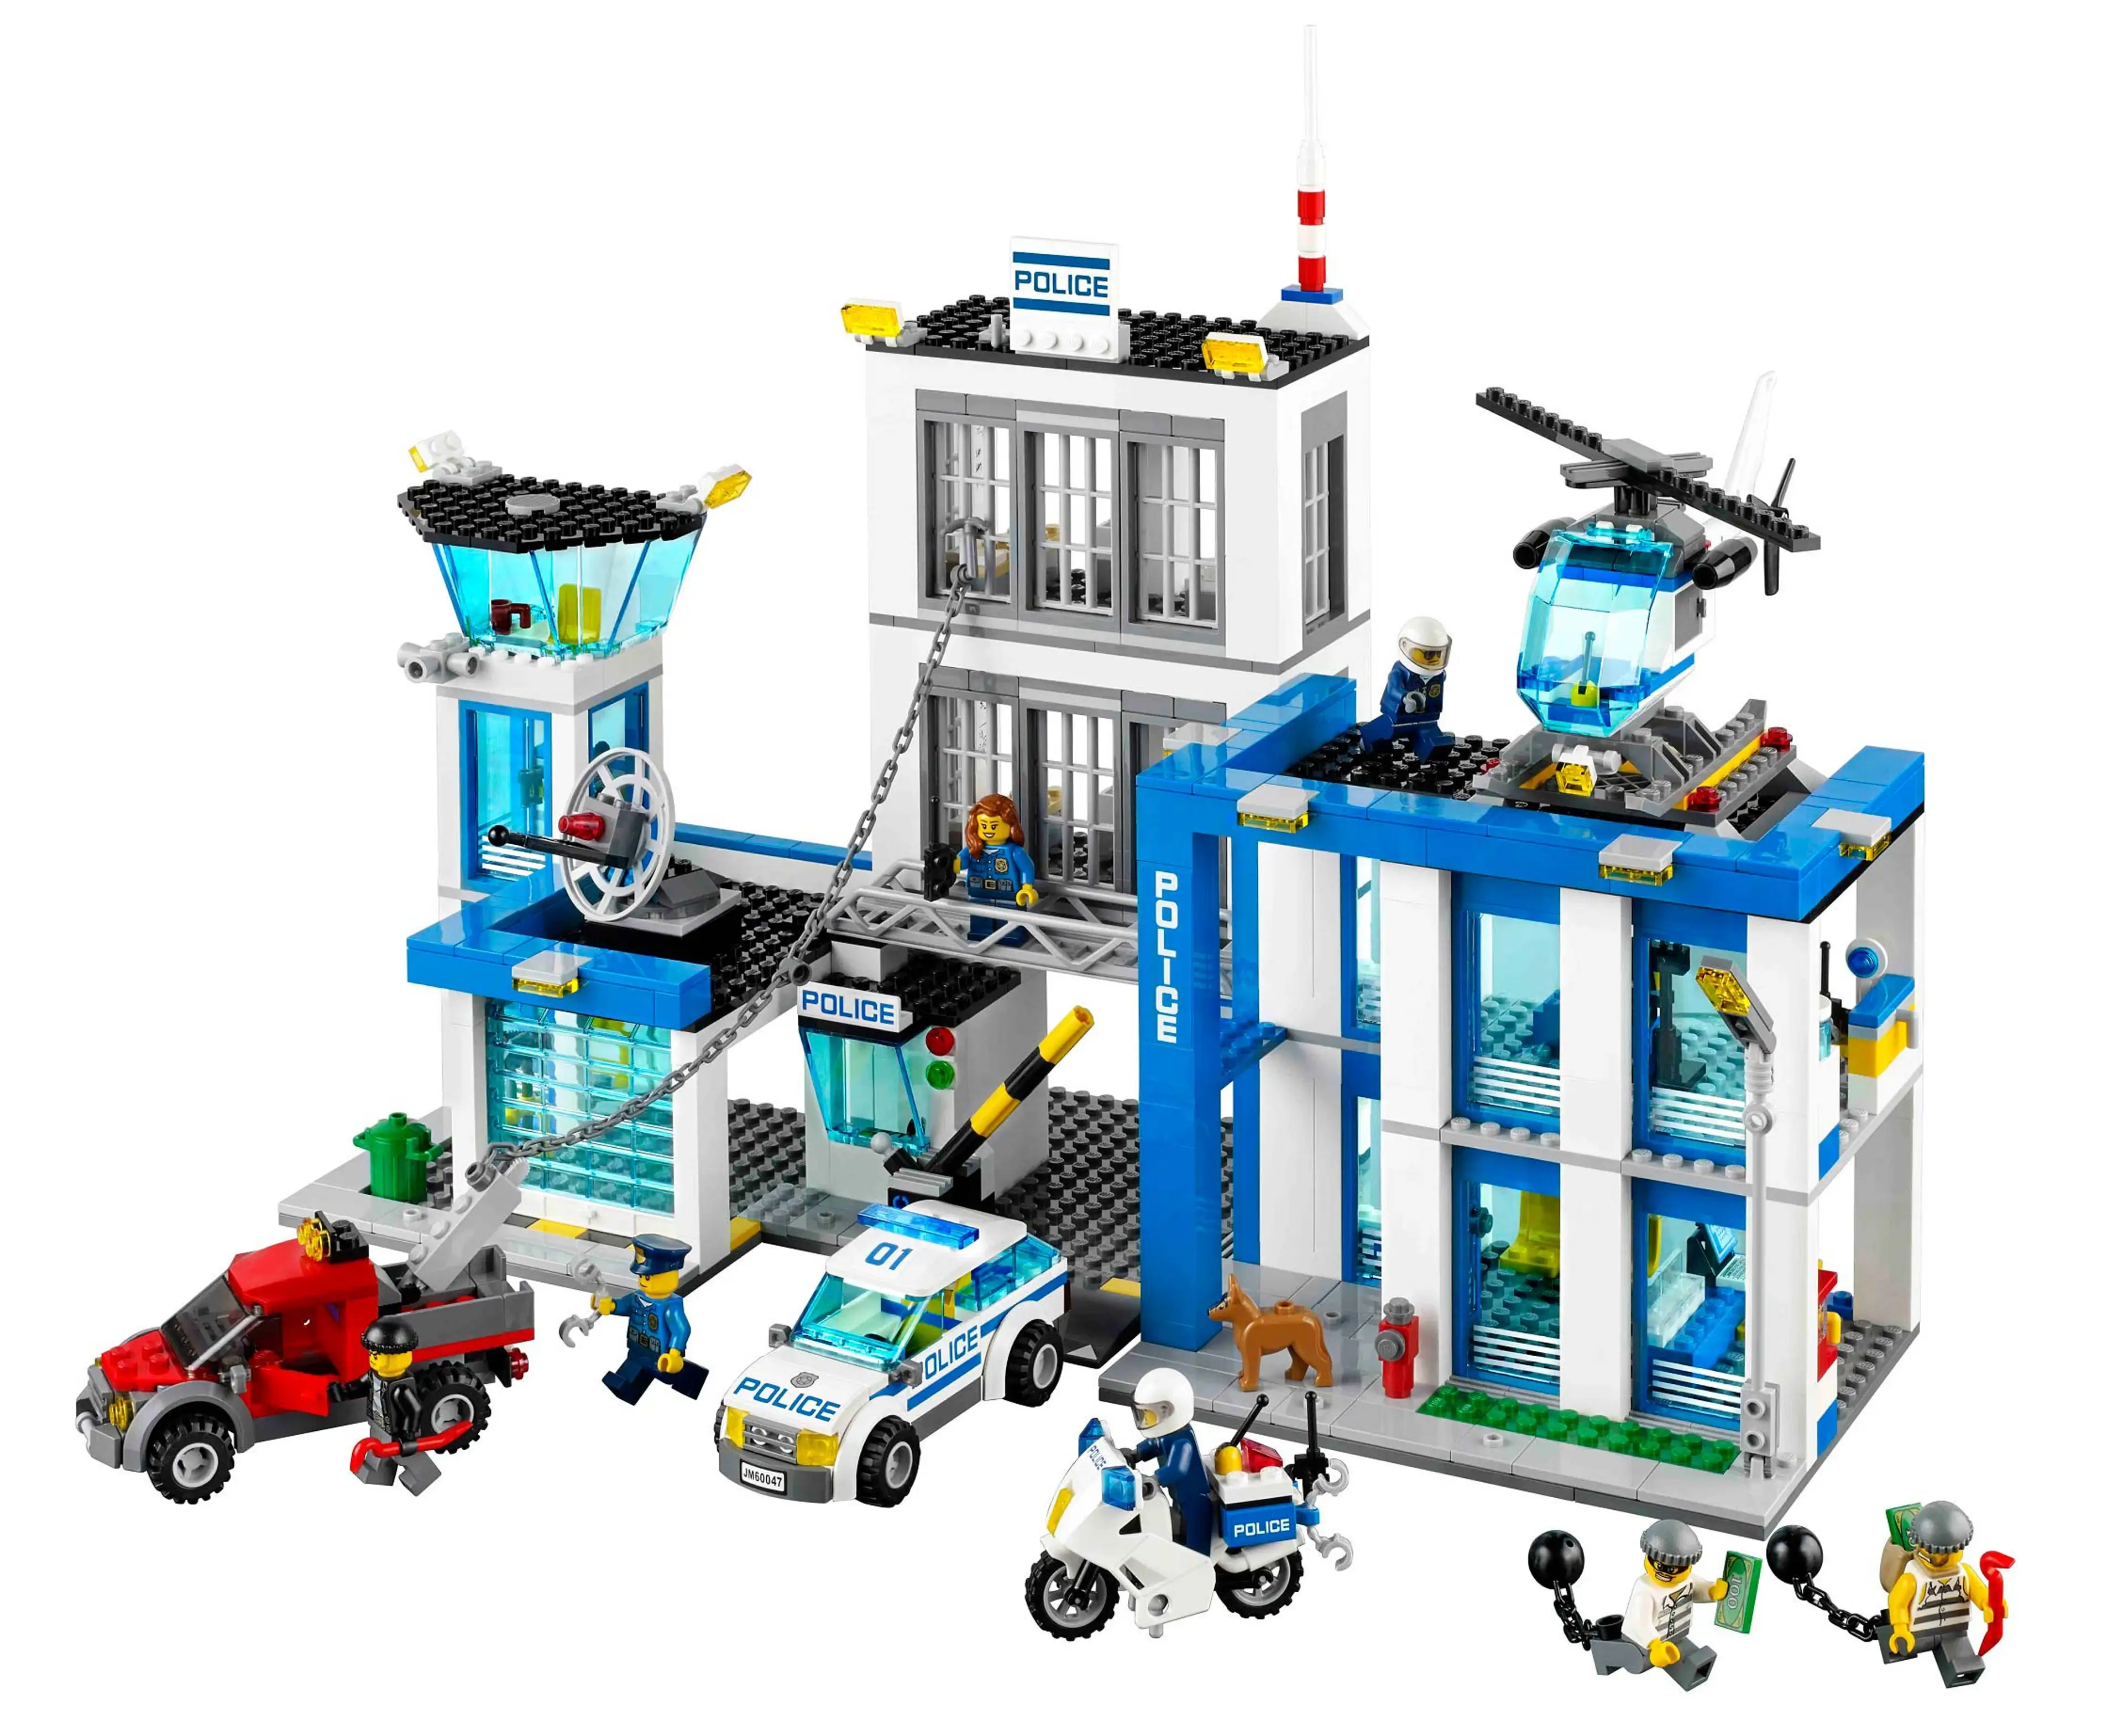 LEGO City police station